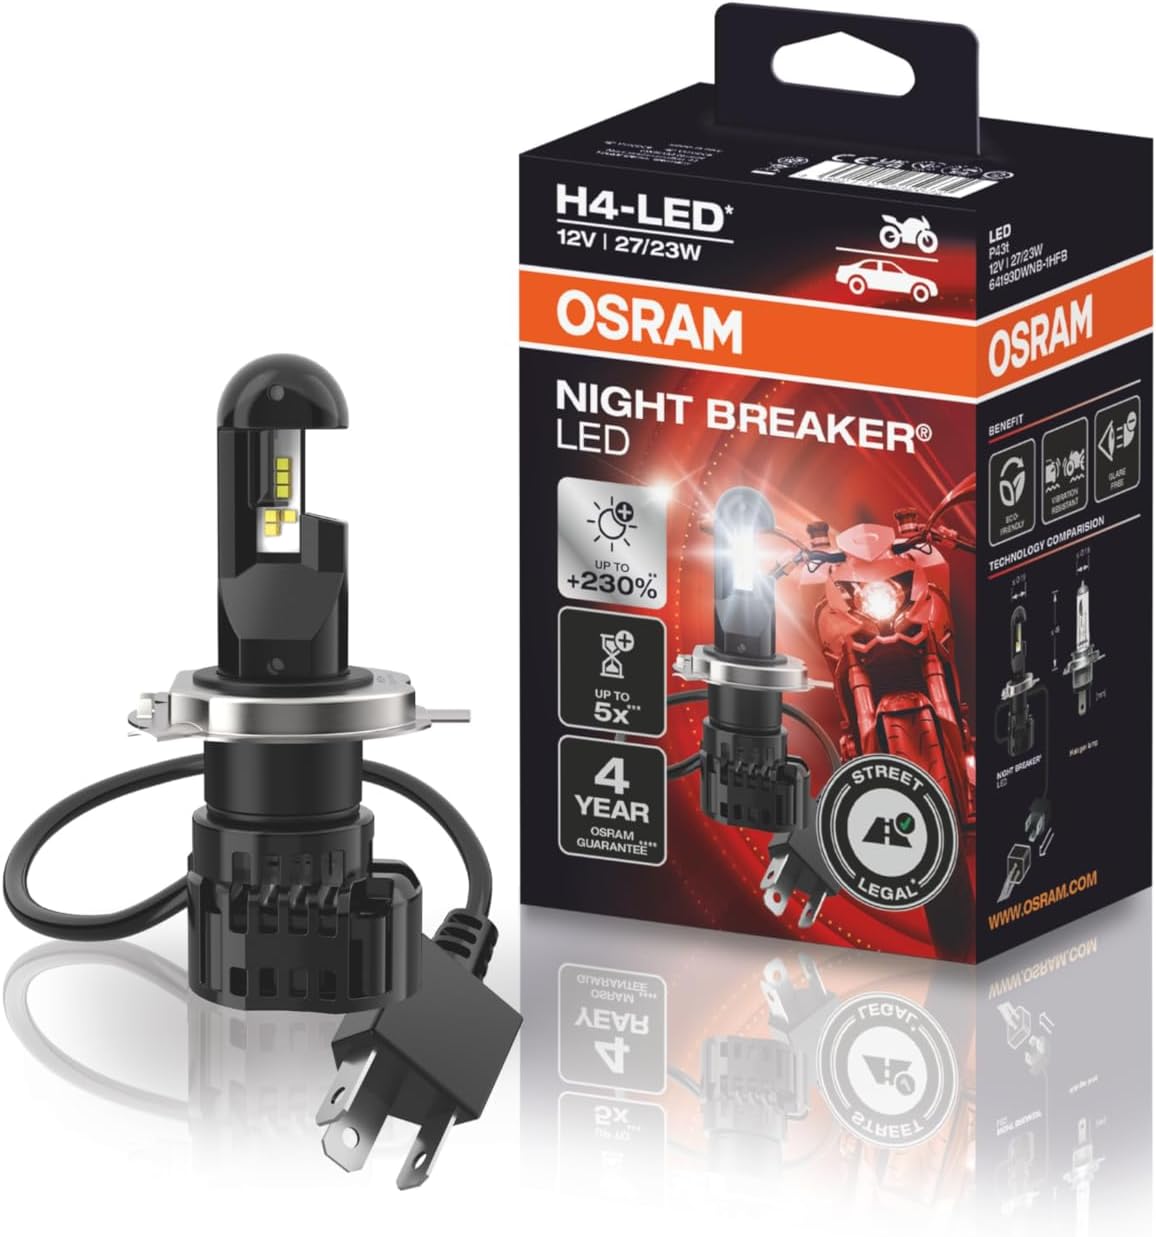 OSRAM NIGHT BREAKER H7-LED; erstes legales LED H7 Abblendlicht mit